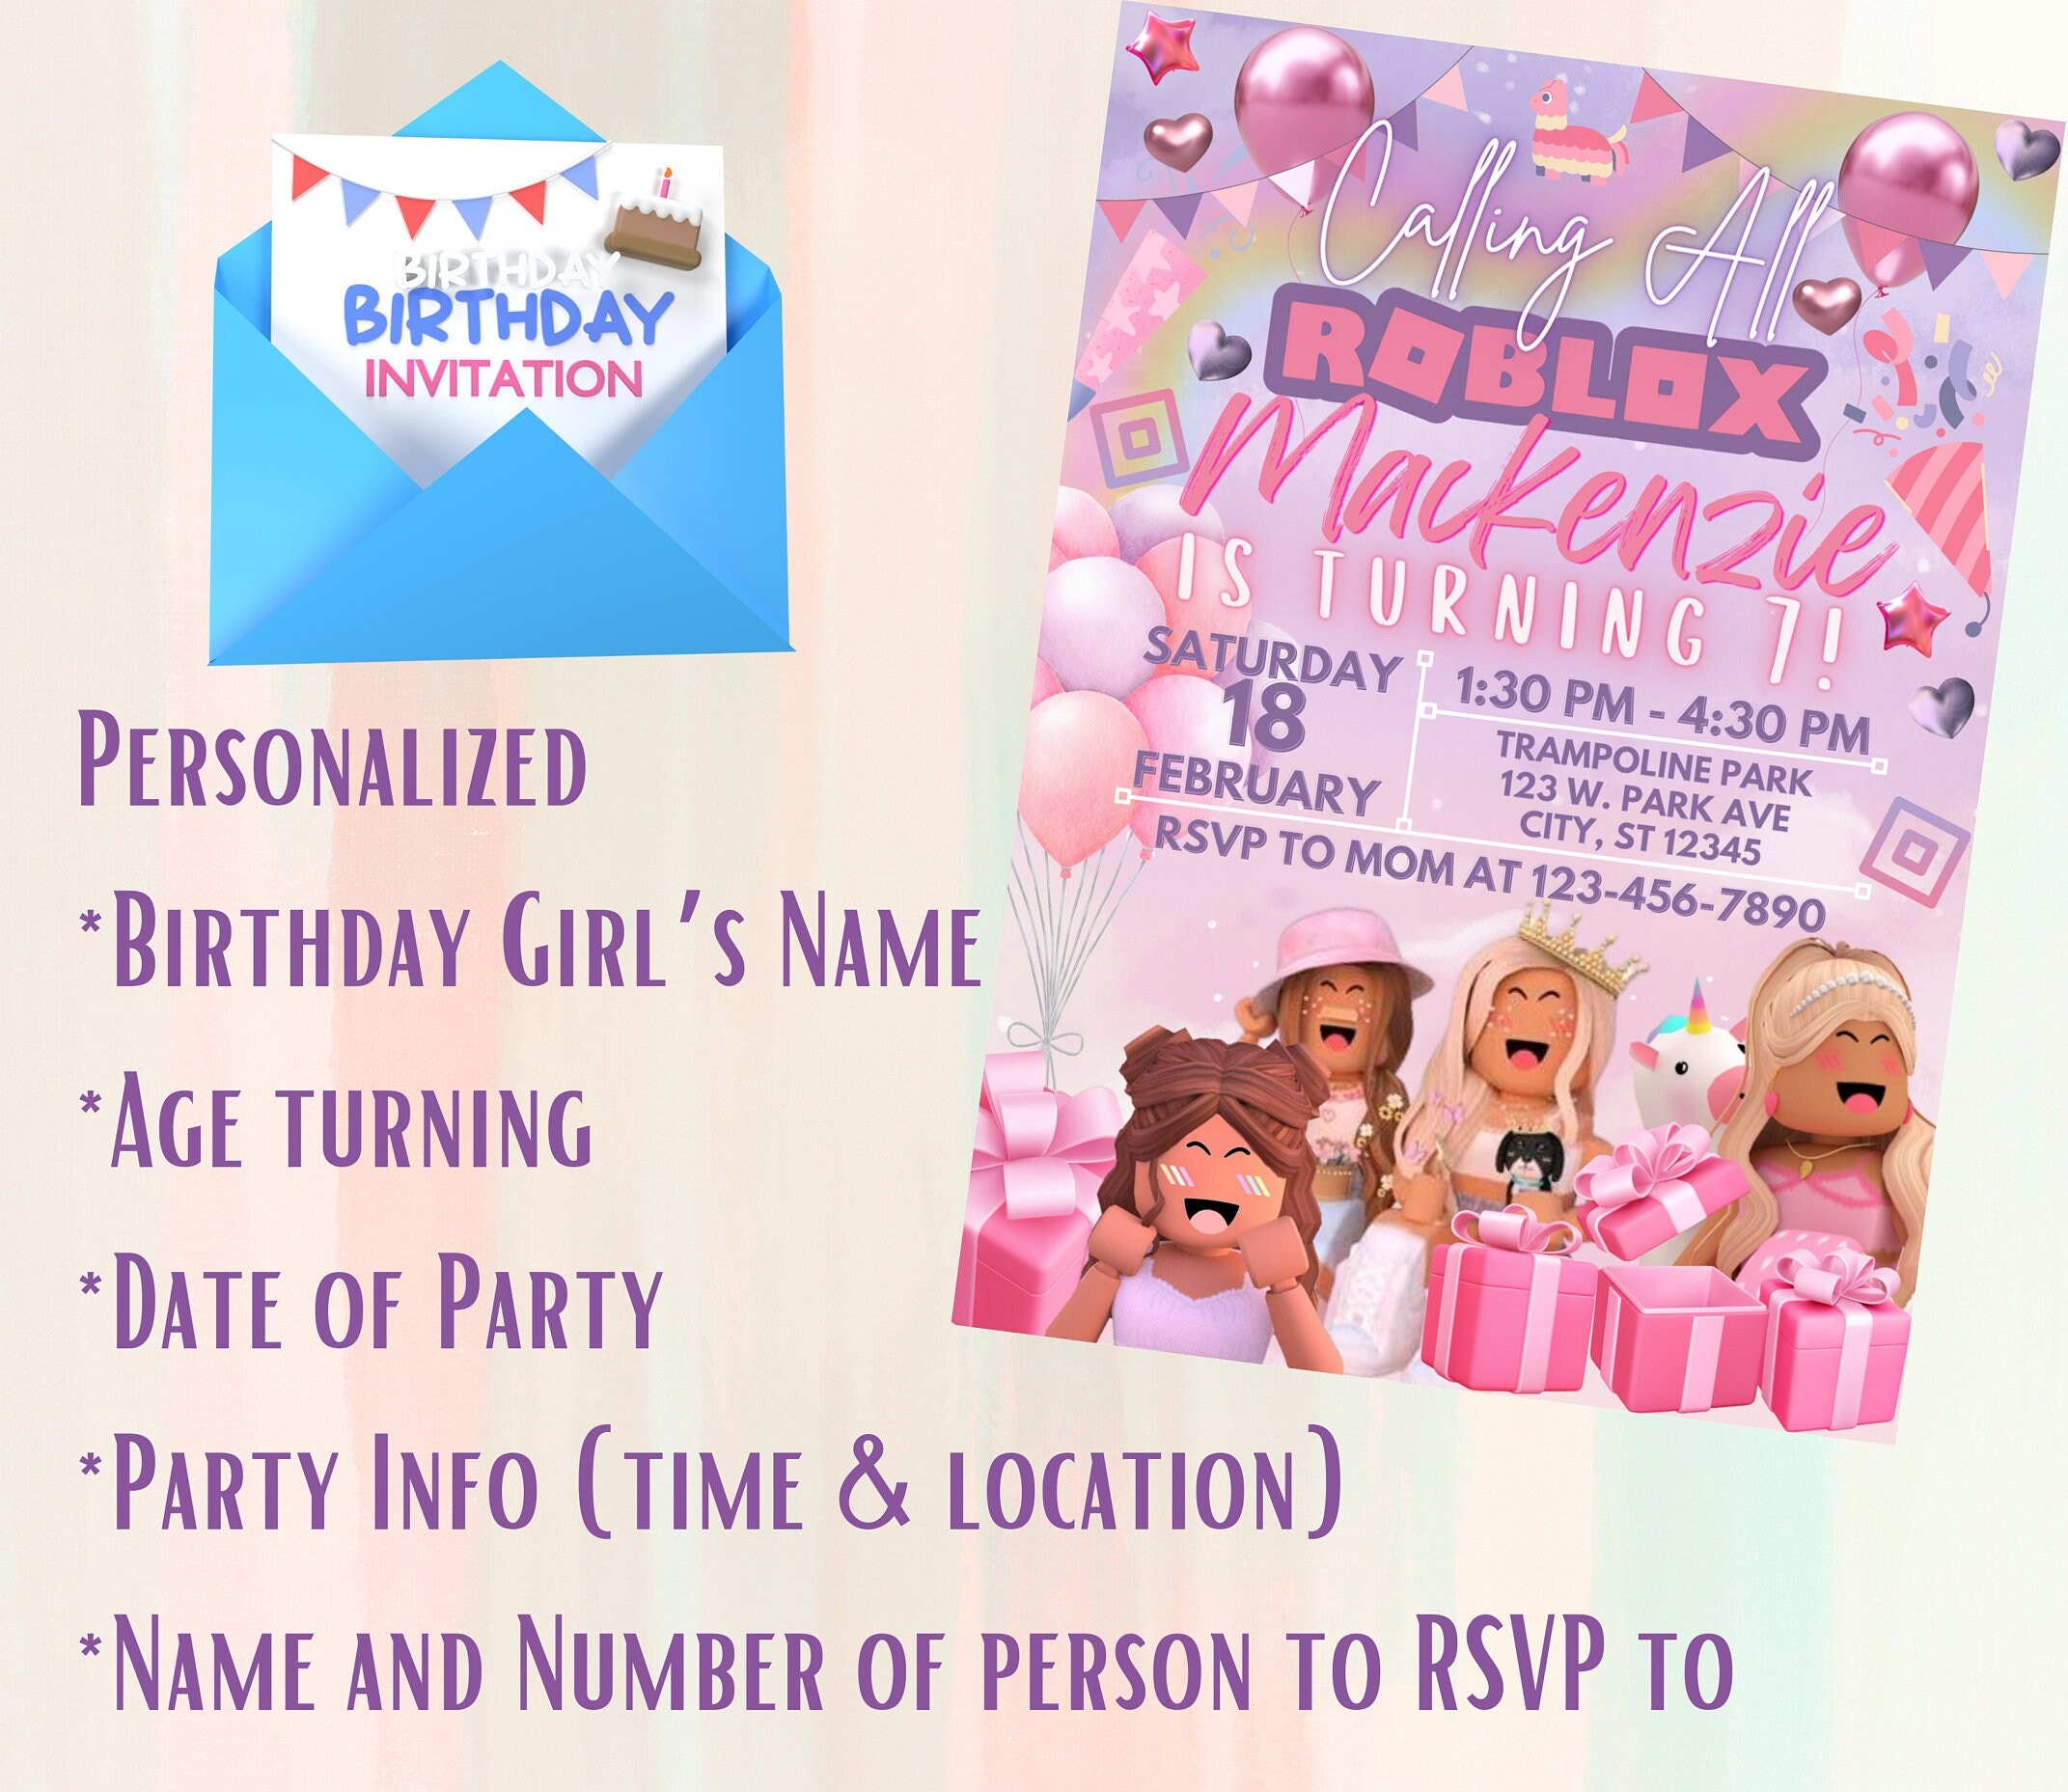 Custom Name Age Birthday Girl/Boy Png, Roblox Kids Birthday